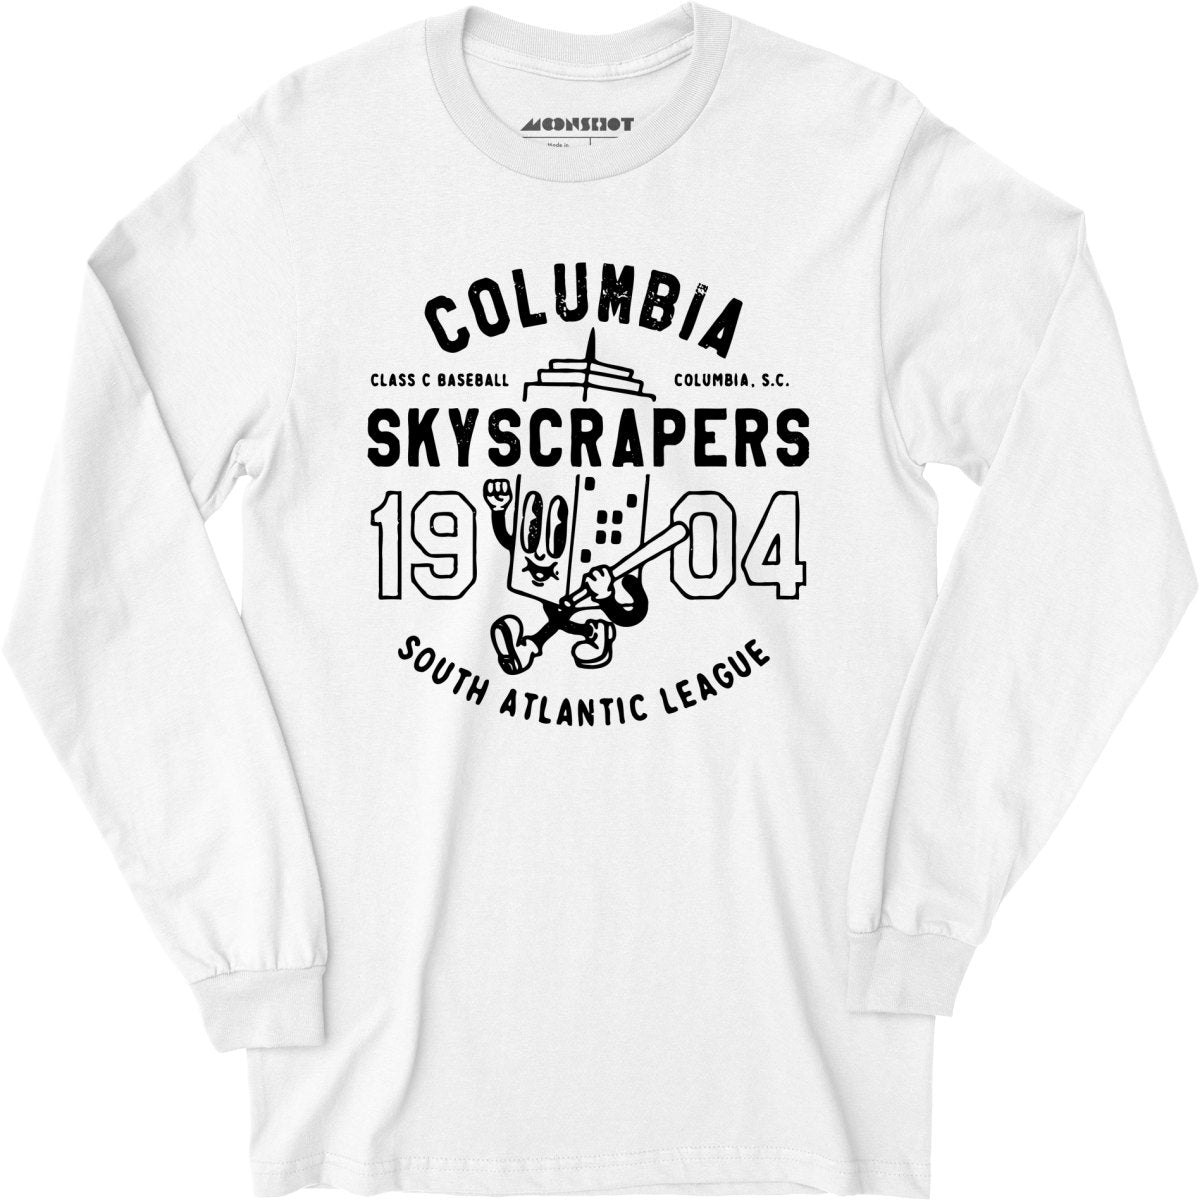 Columbia Skyscrapers - South Carolina - Vintage Defunct Baseball Teams - Long Sleeve T-Shirt